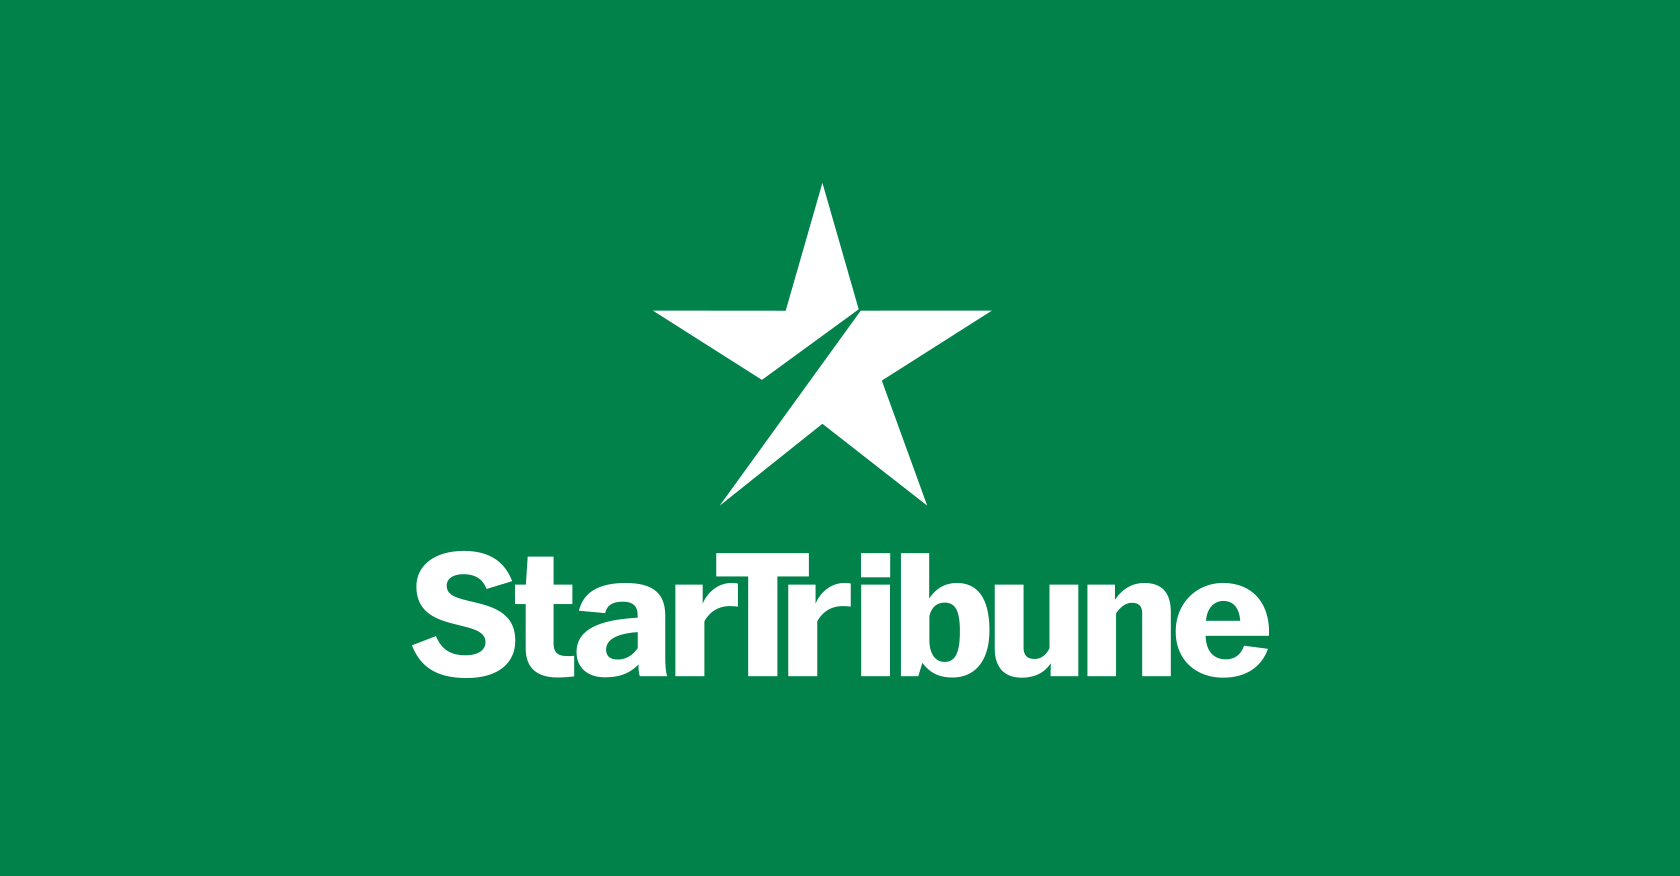 Woman found dead in RV that caught fire behind north Minneapolis restaurant - Minneapolis Star Tribune